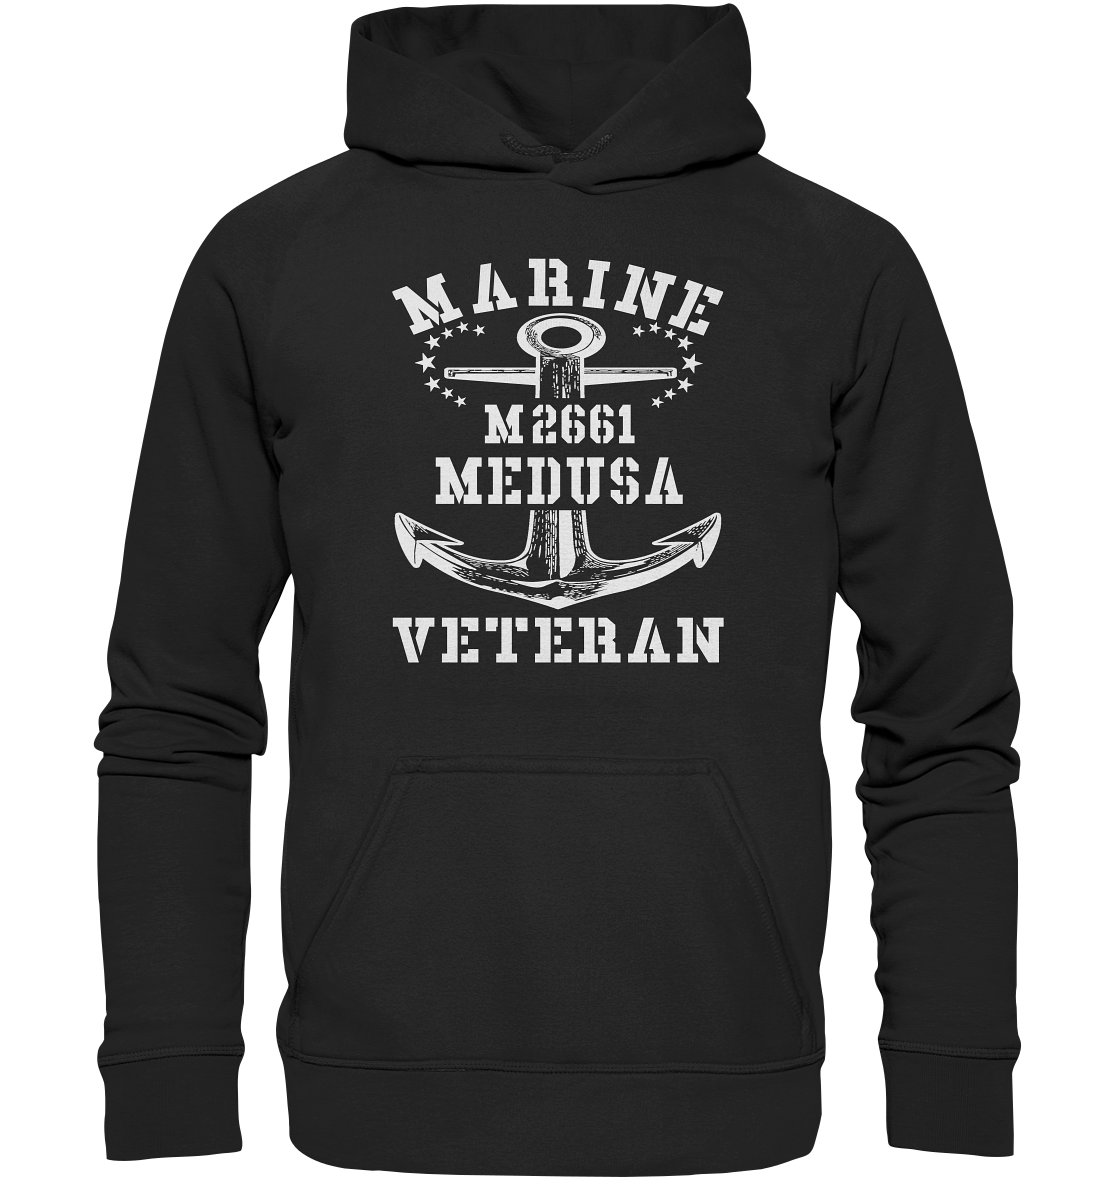 BiMi M2661 MEDUSA Marine Veteran - Basic Unisex Hoodie XL